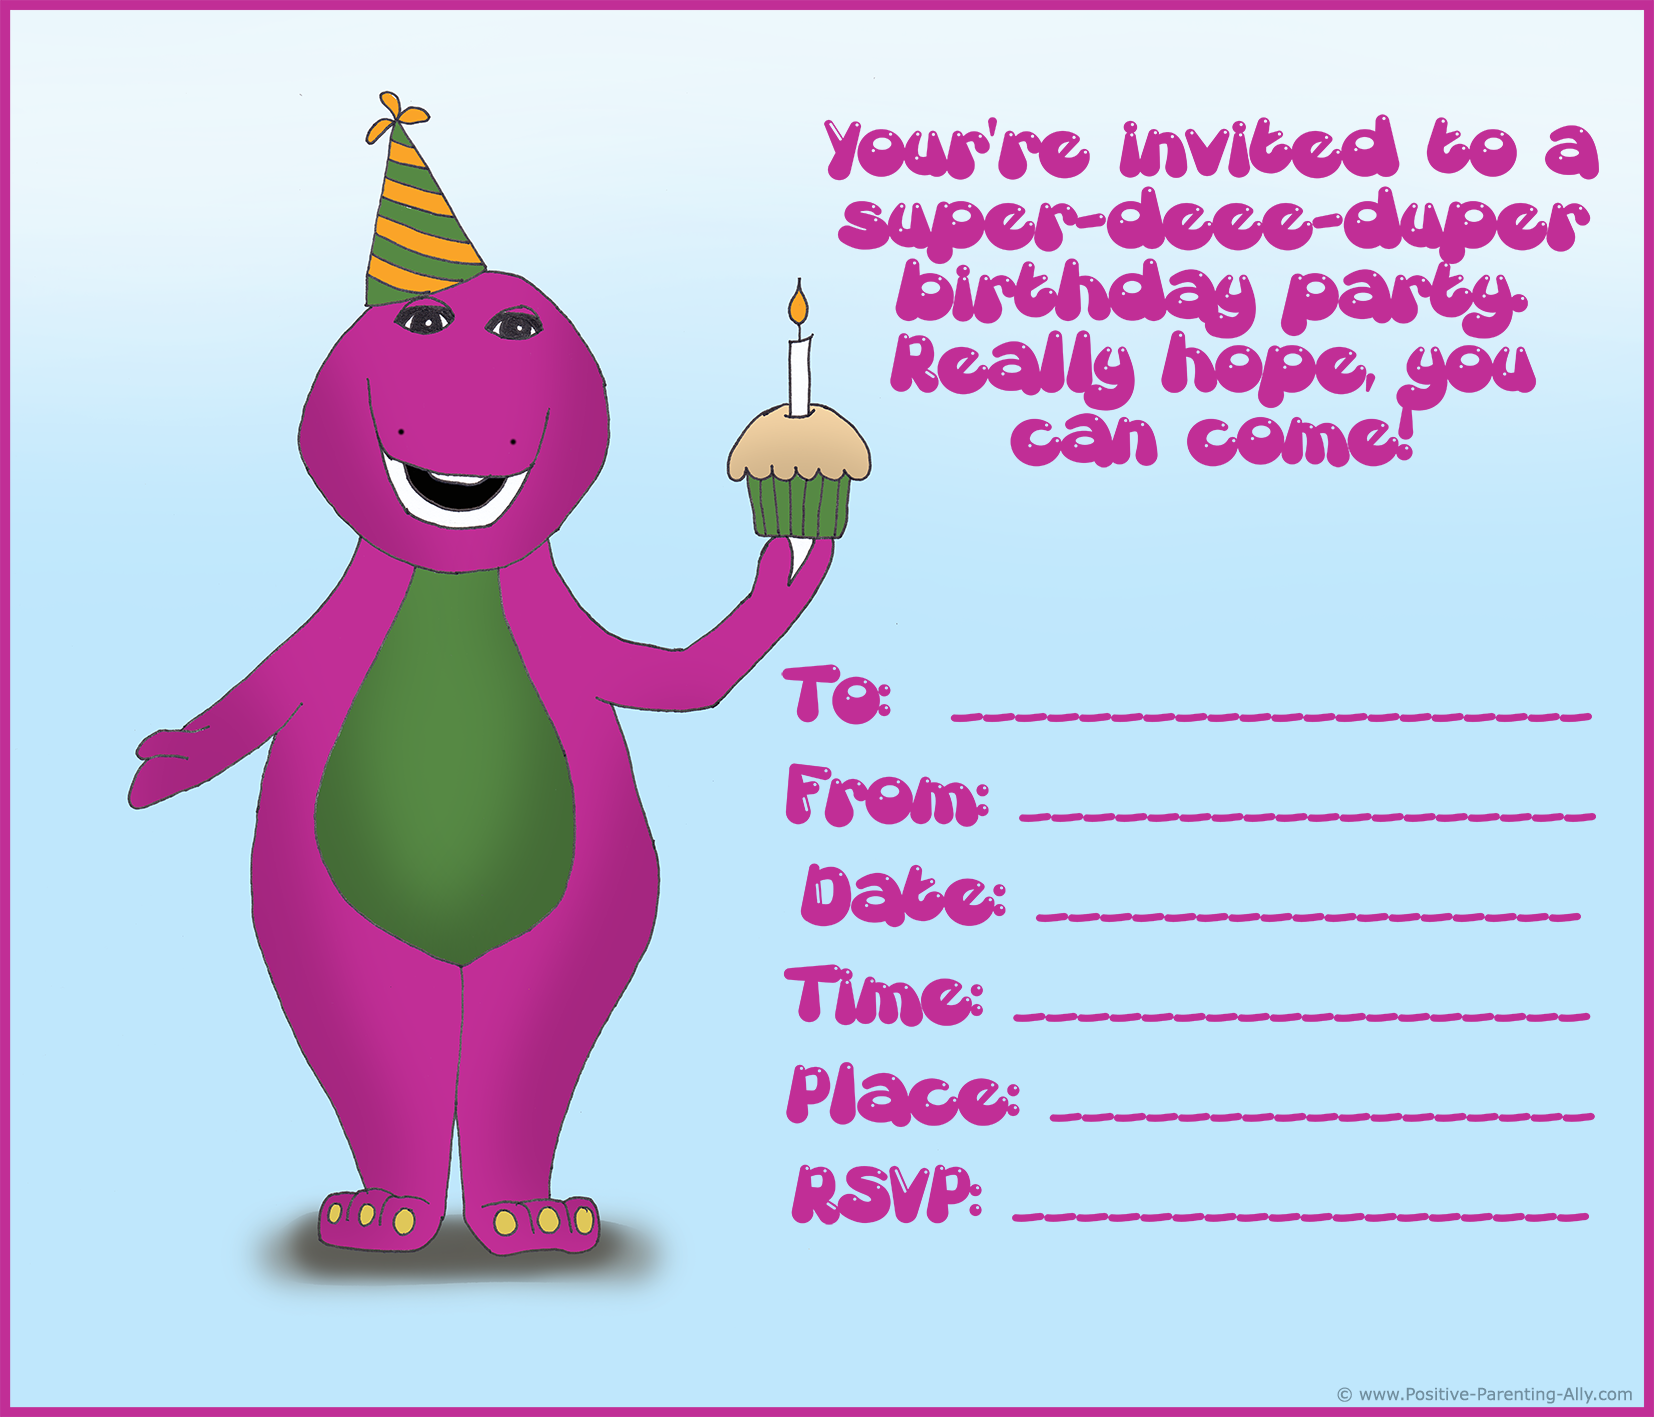 Dinosaur birthday invitation: Barney the Dinosaur birthday invite for kids.